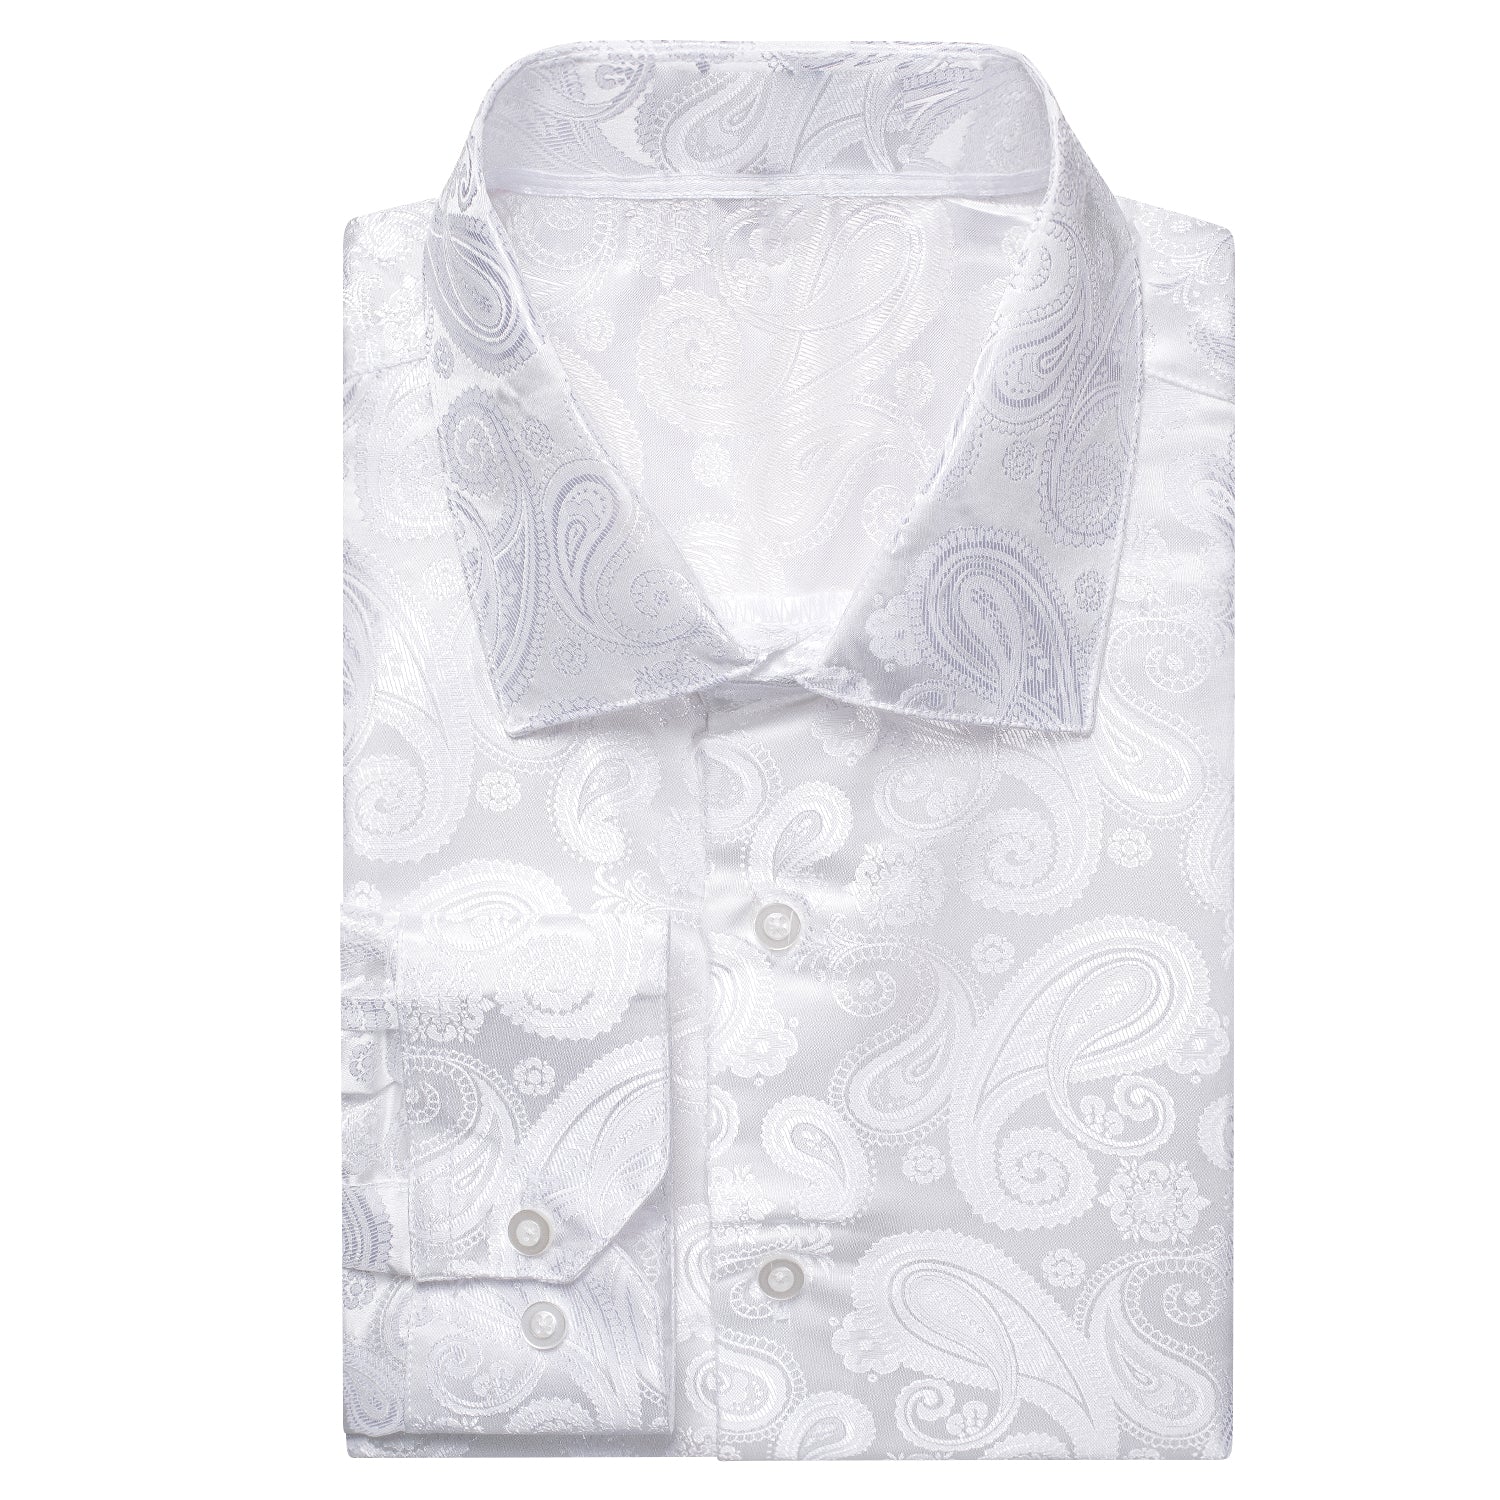 White Paisley Silk Men's Long Sleeve Shirt Casual